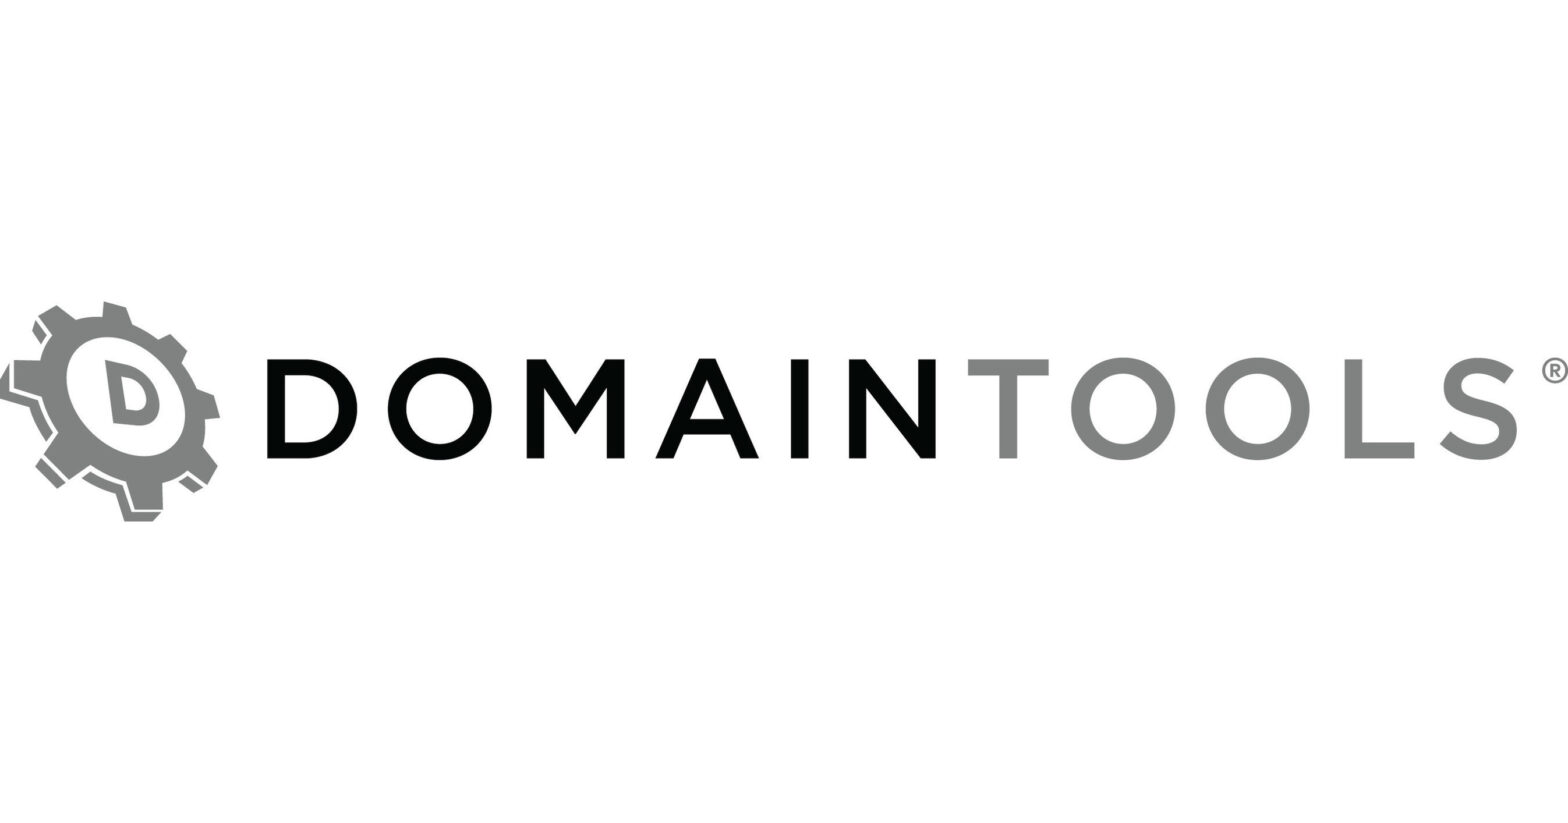 domain tools